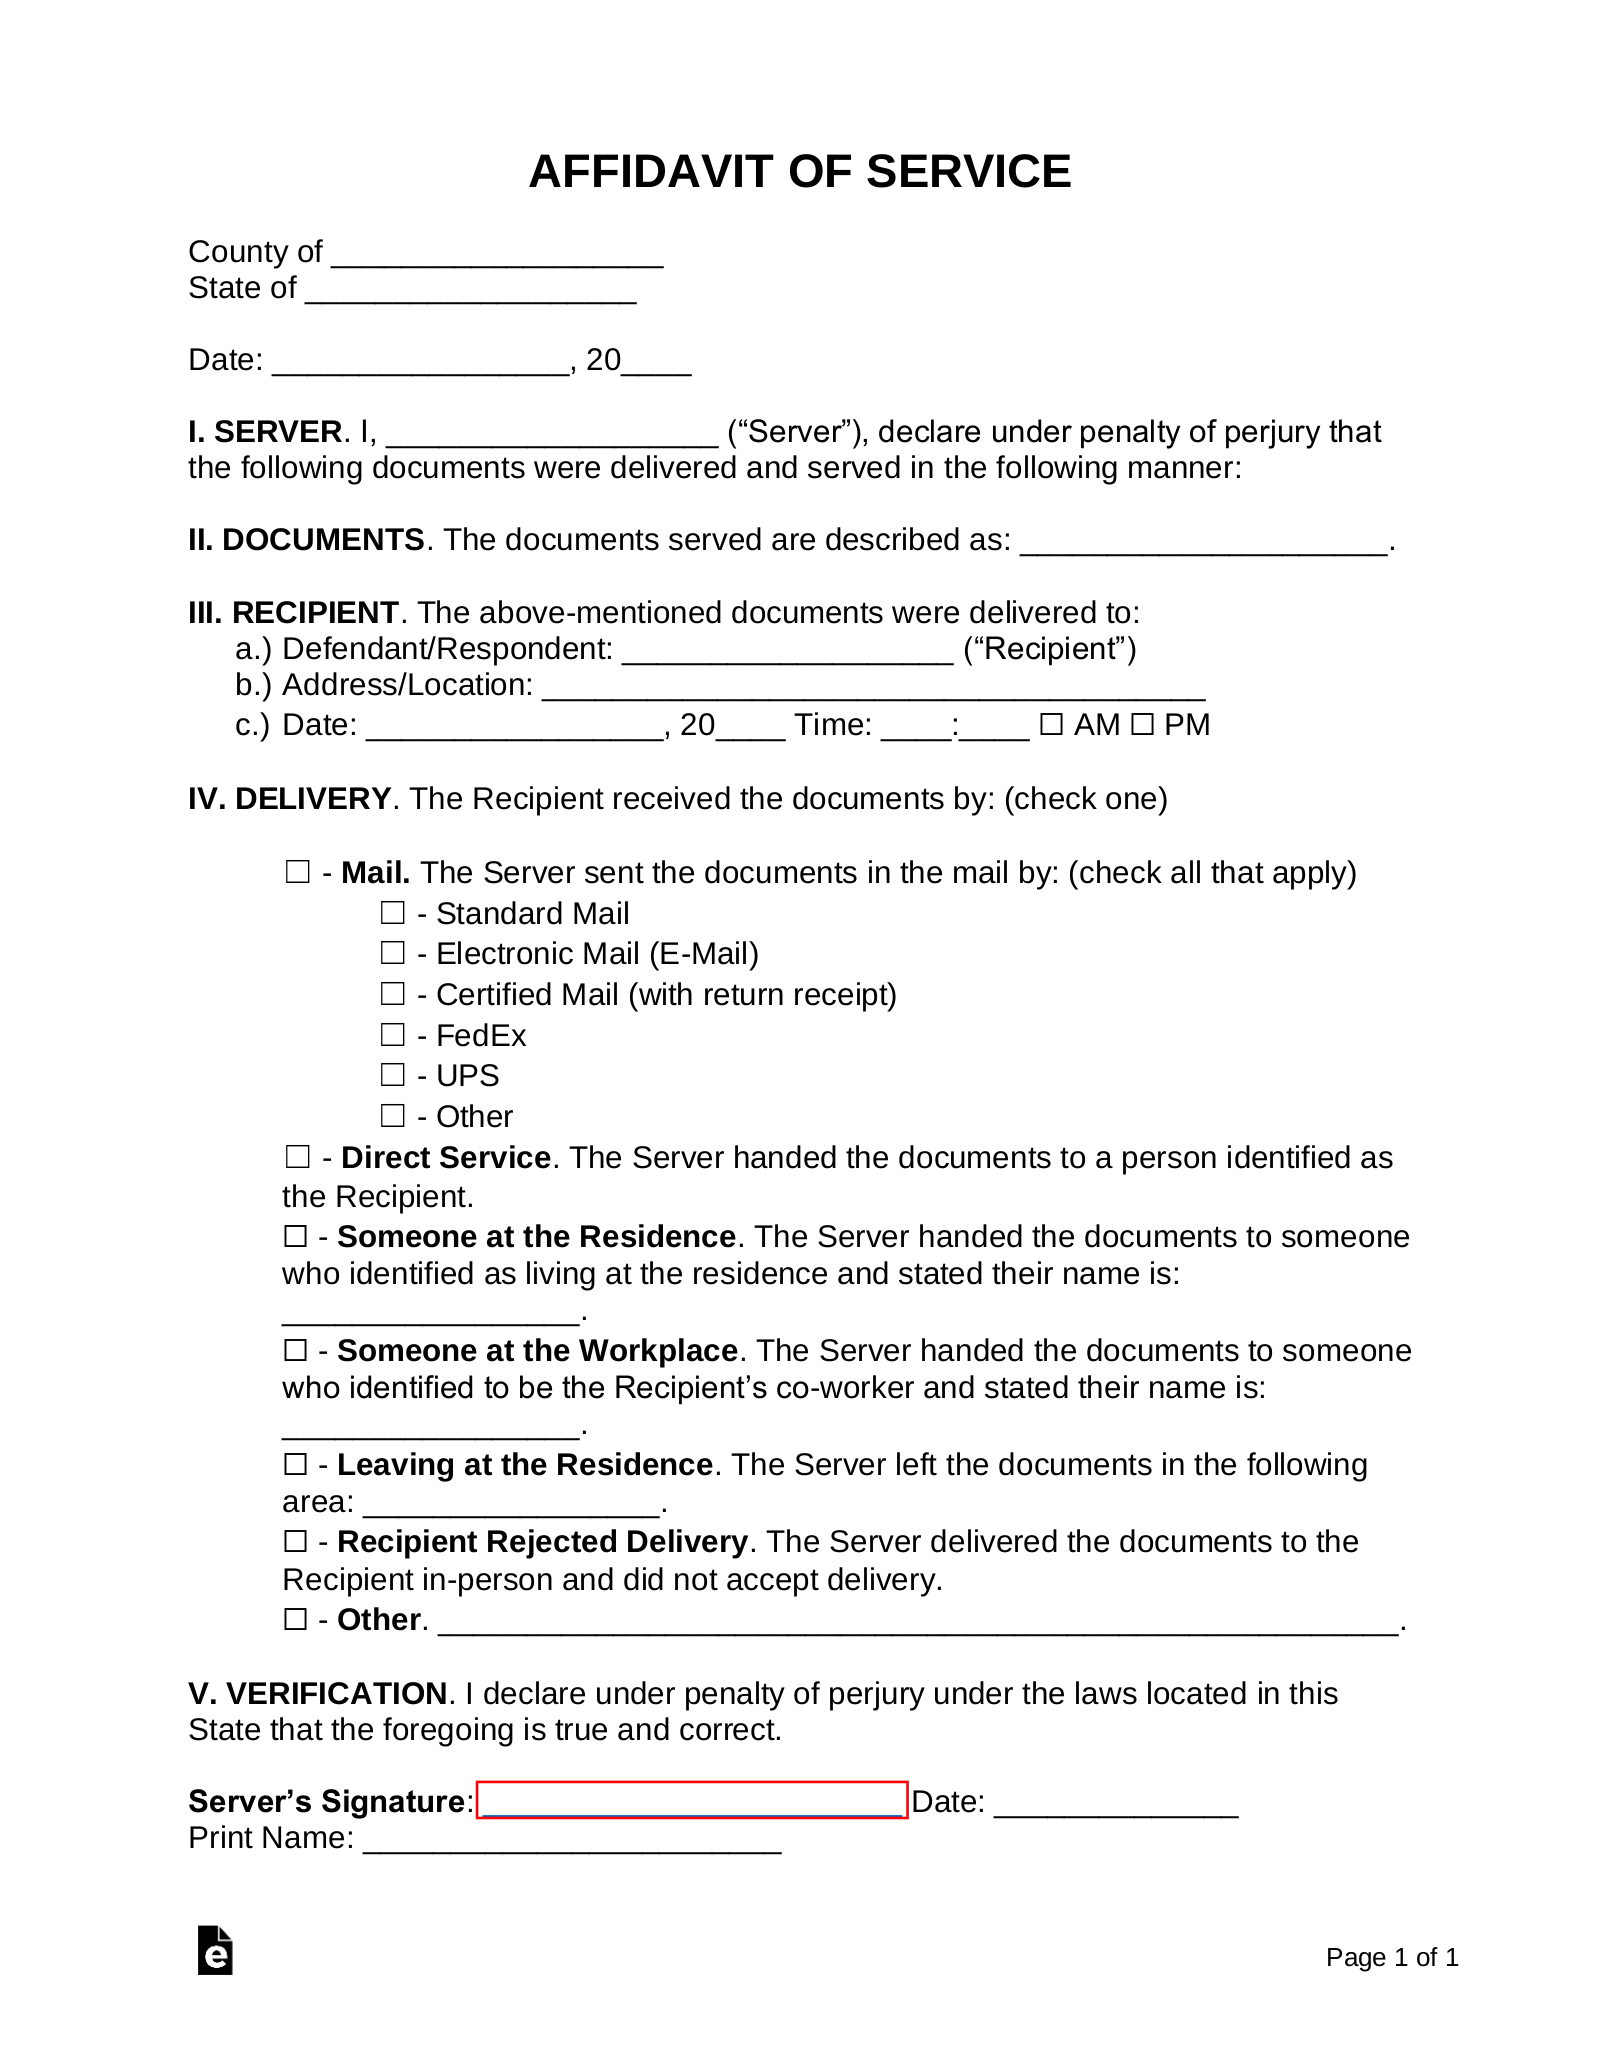 Affidavit (Certificate) of Service Form